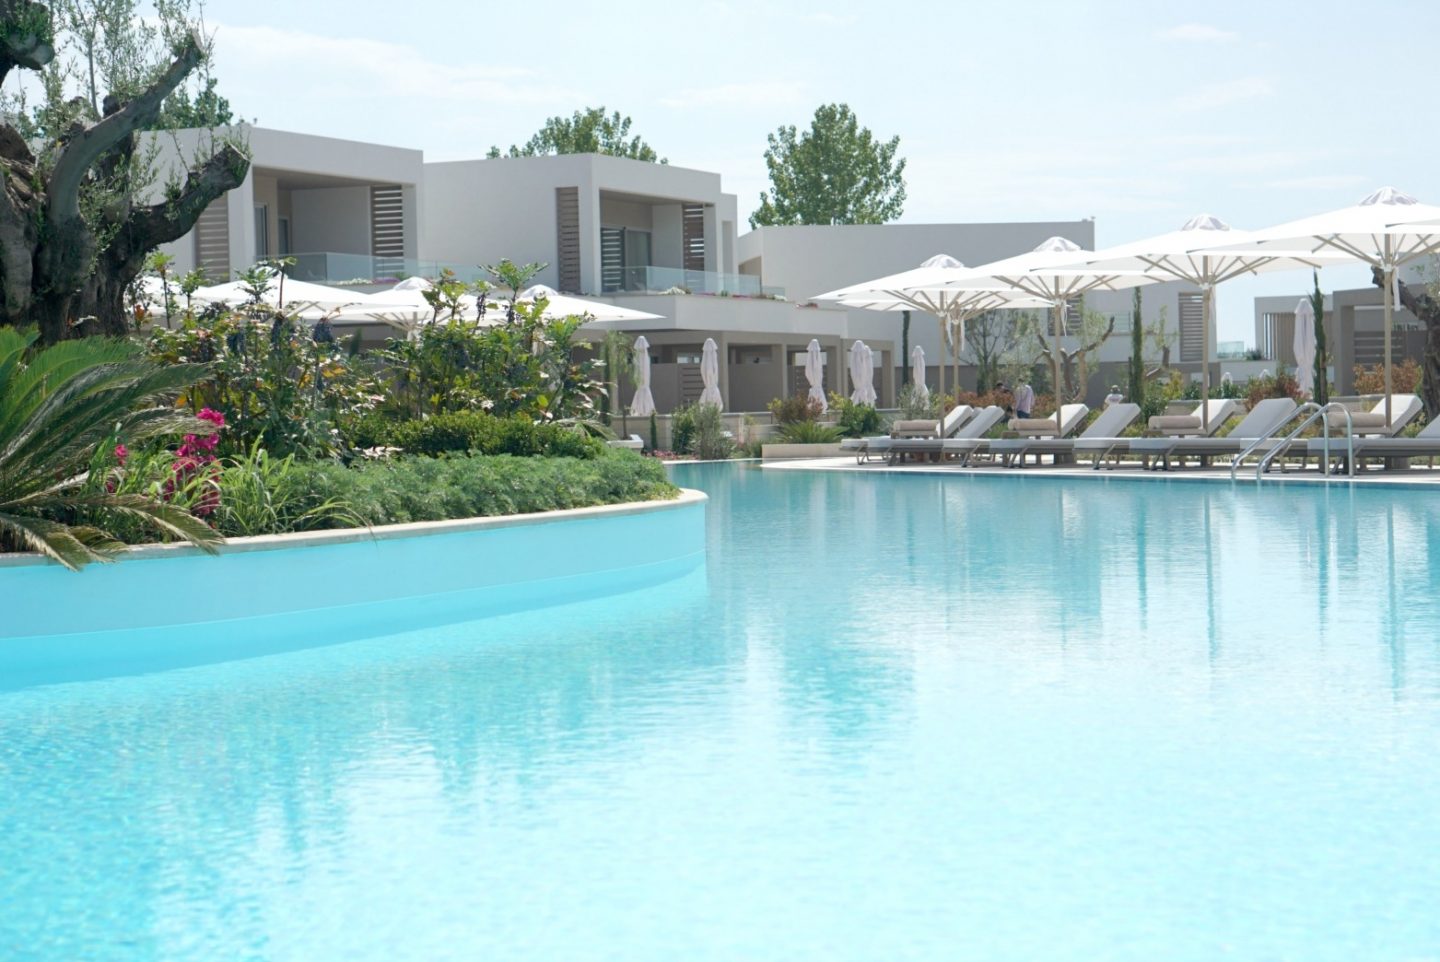 The Deluxe pool at Sani Dunes Resort Halkidiki extraordinarychaos.com